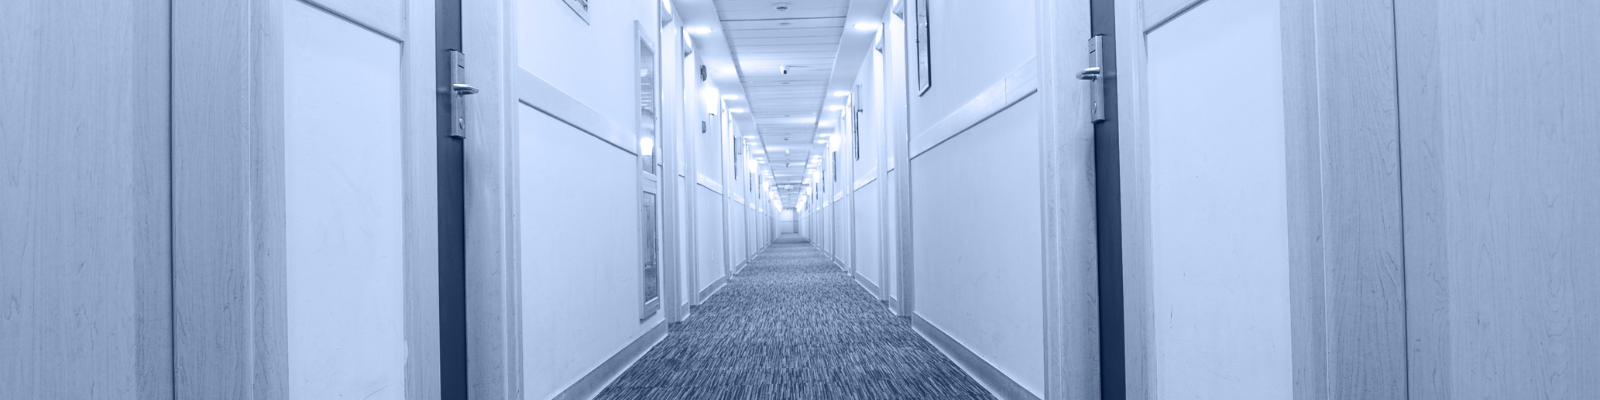 LED Savings with Light Bulbs Hotel Hallway